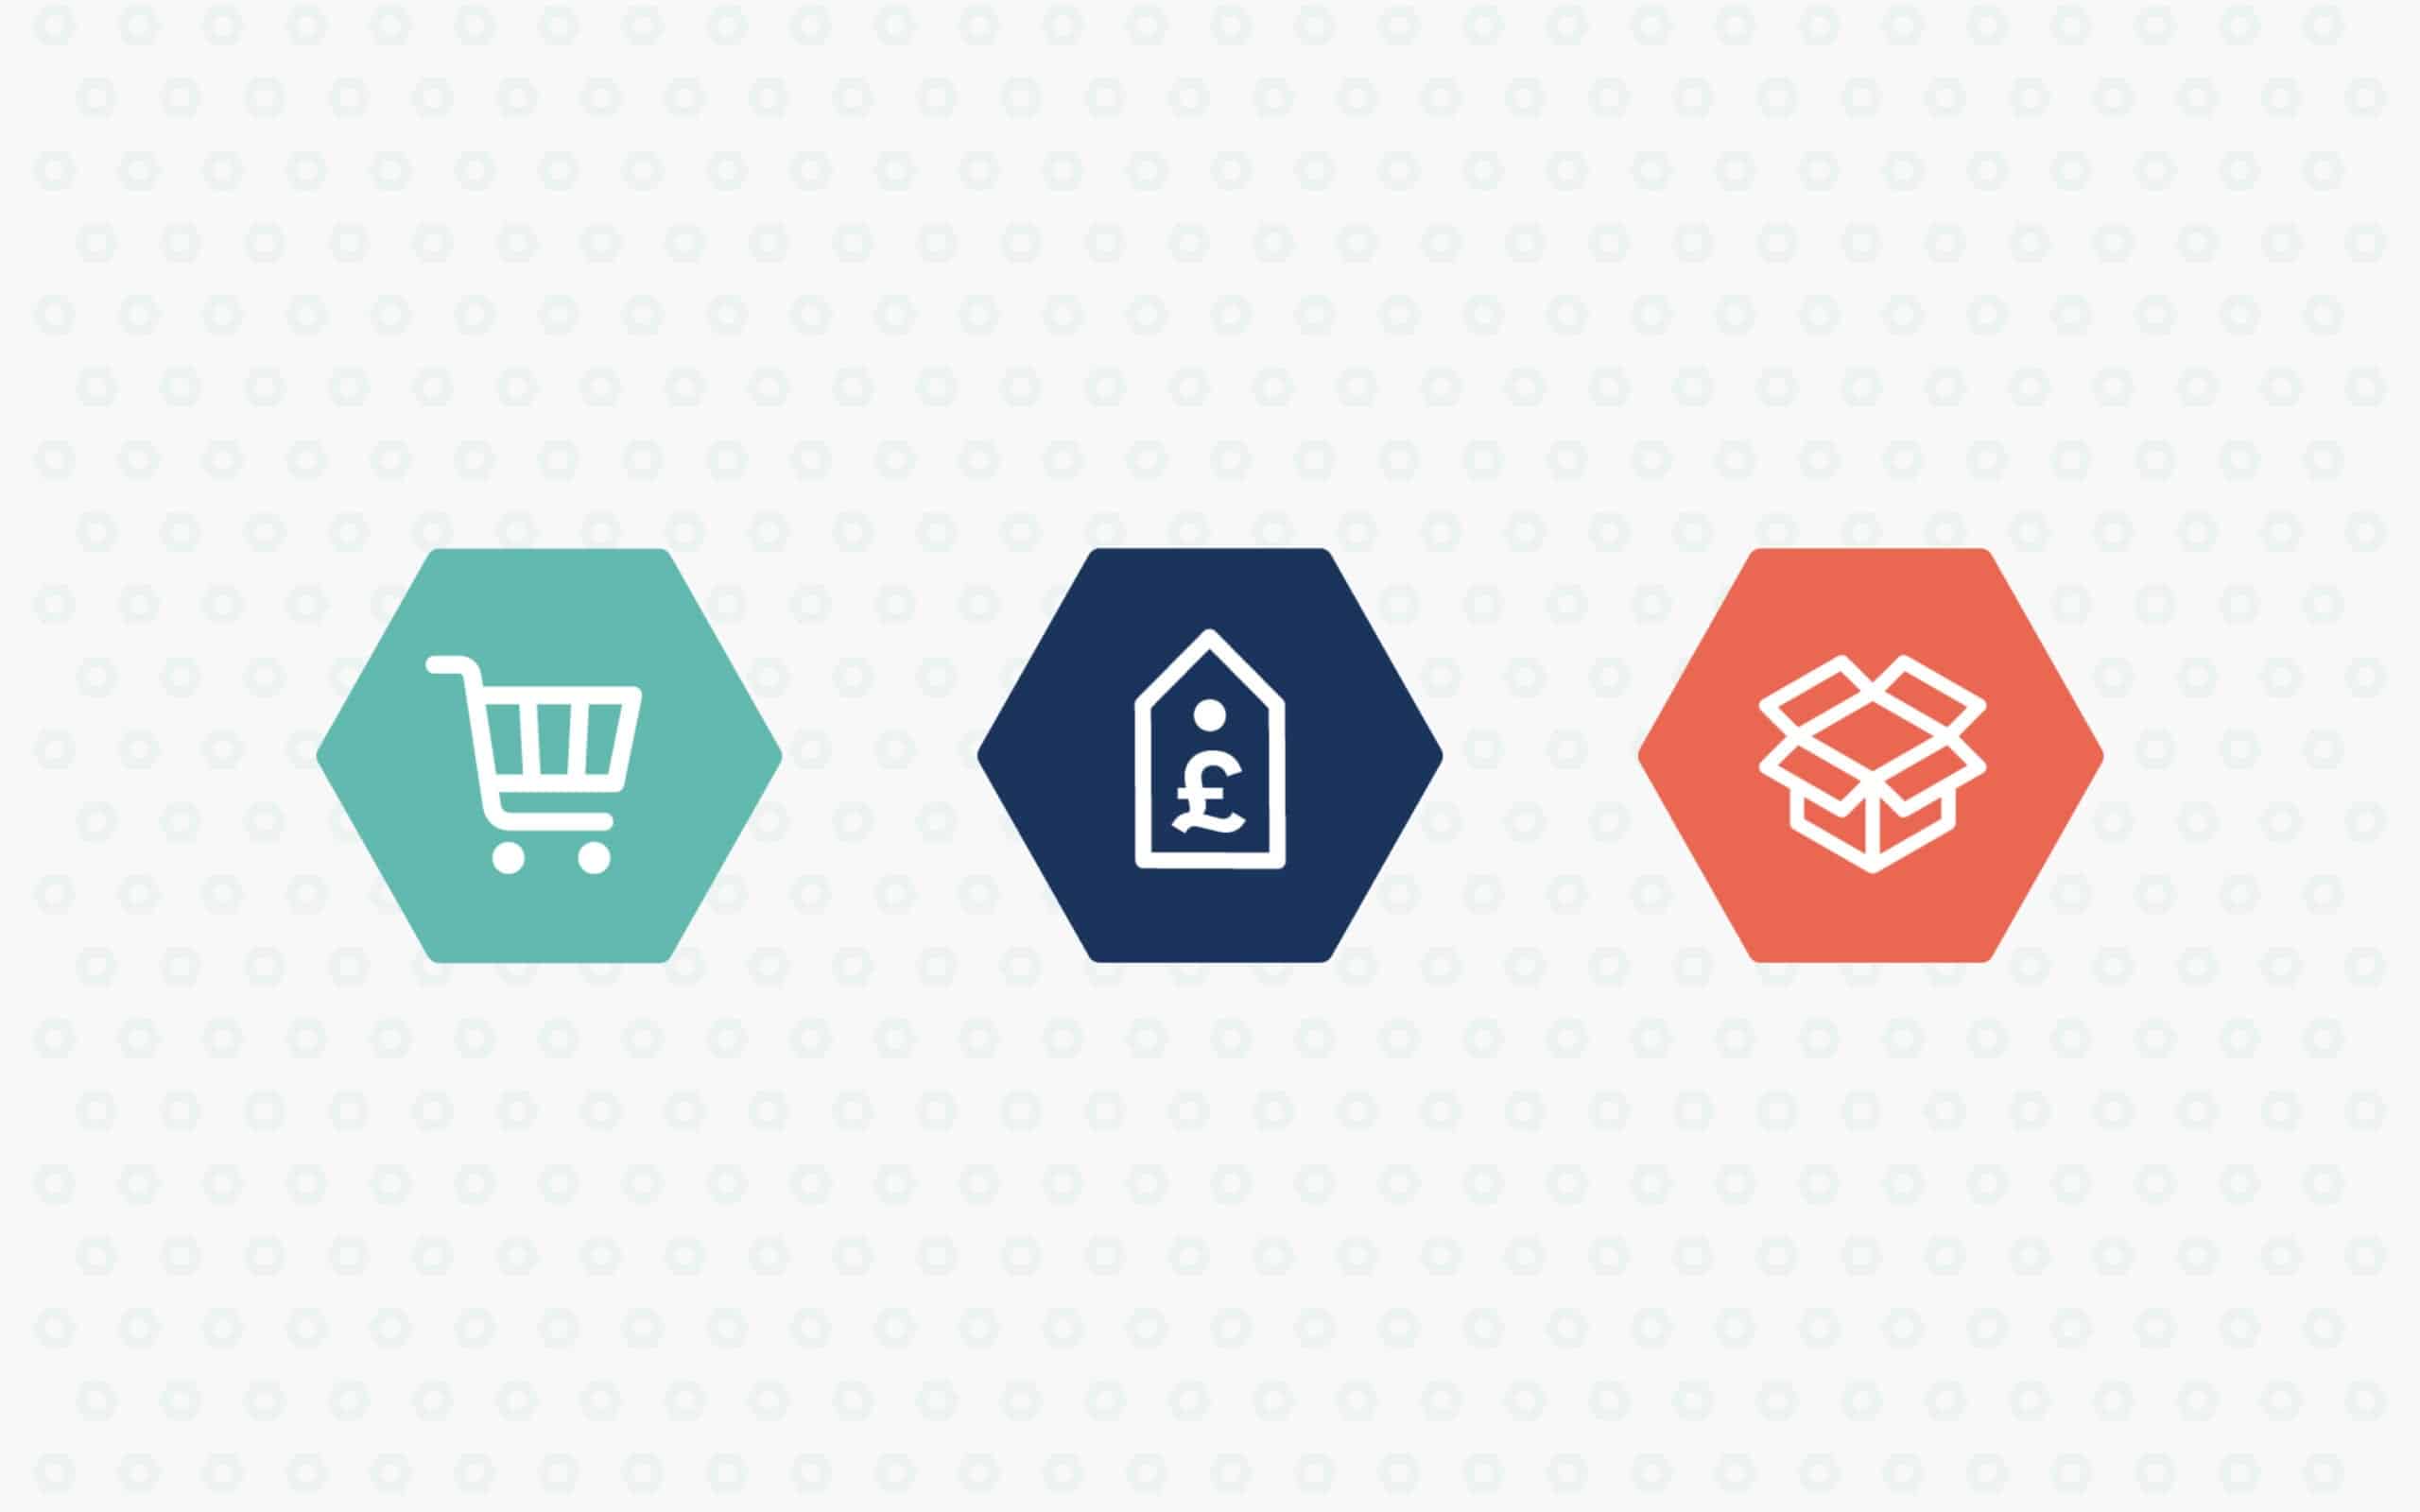 sm supplies startup brand icons design illustrations